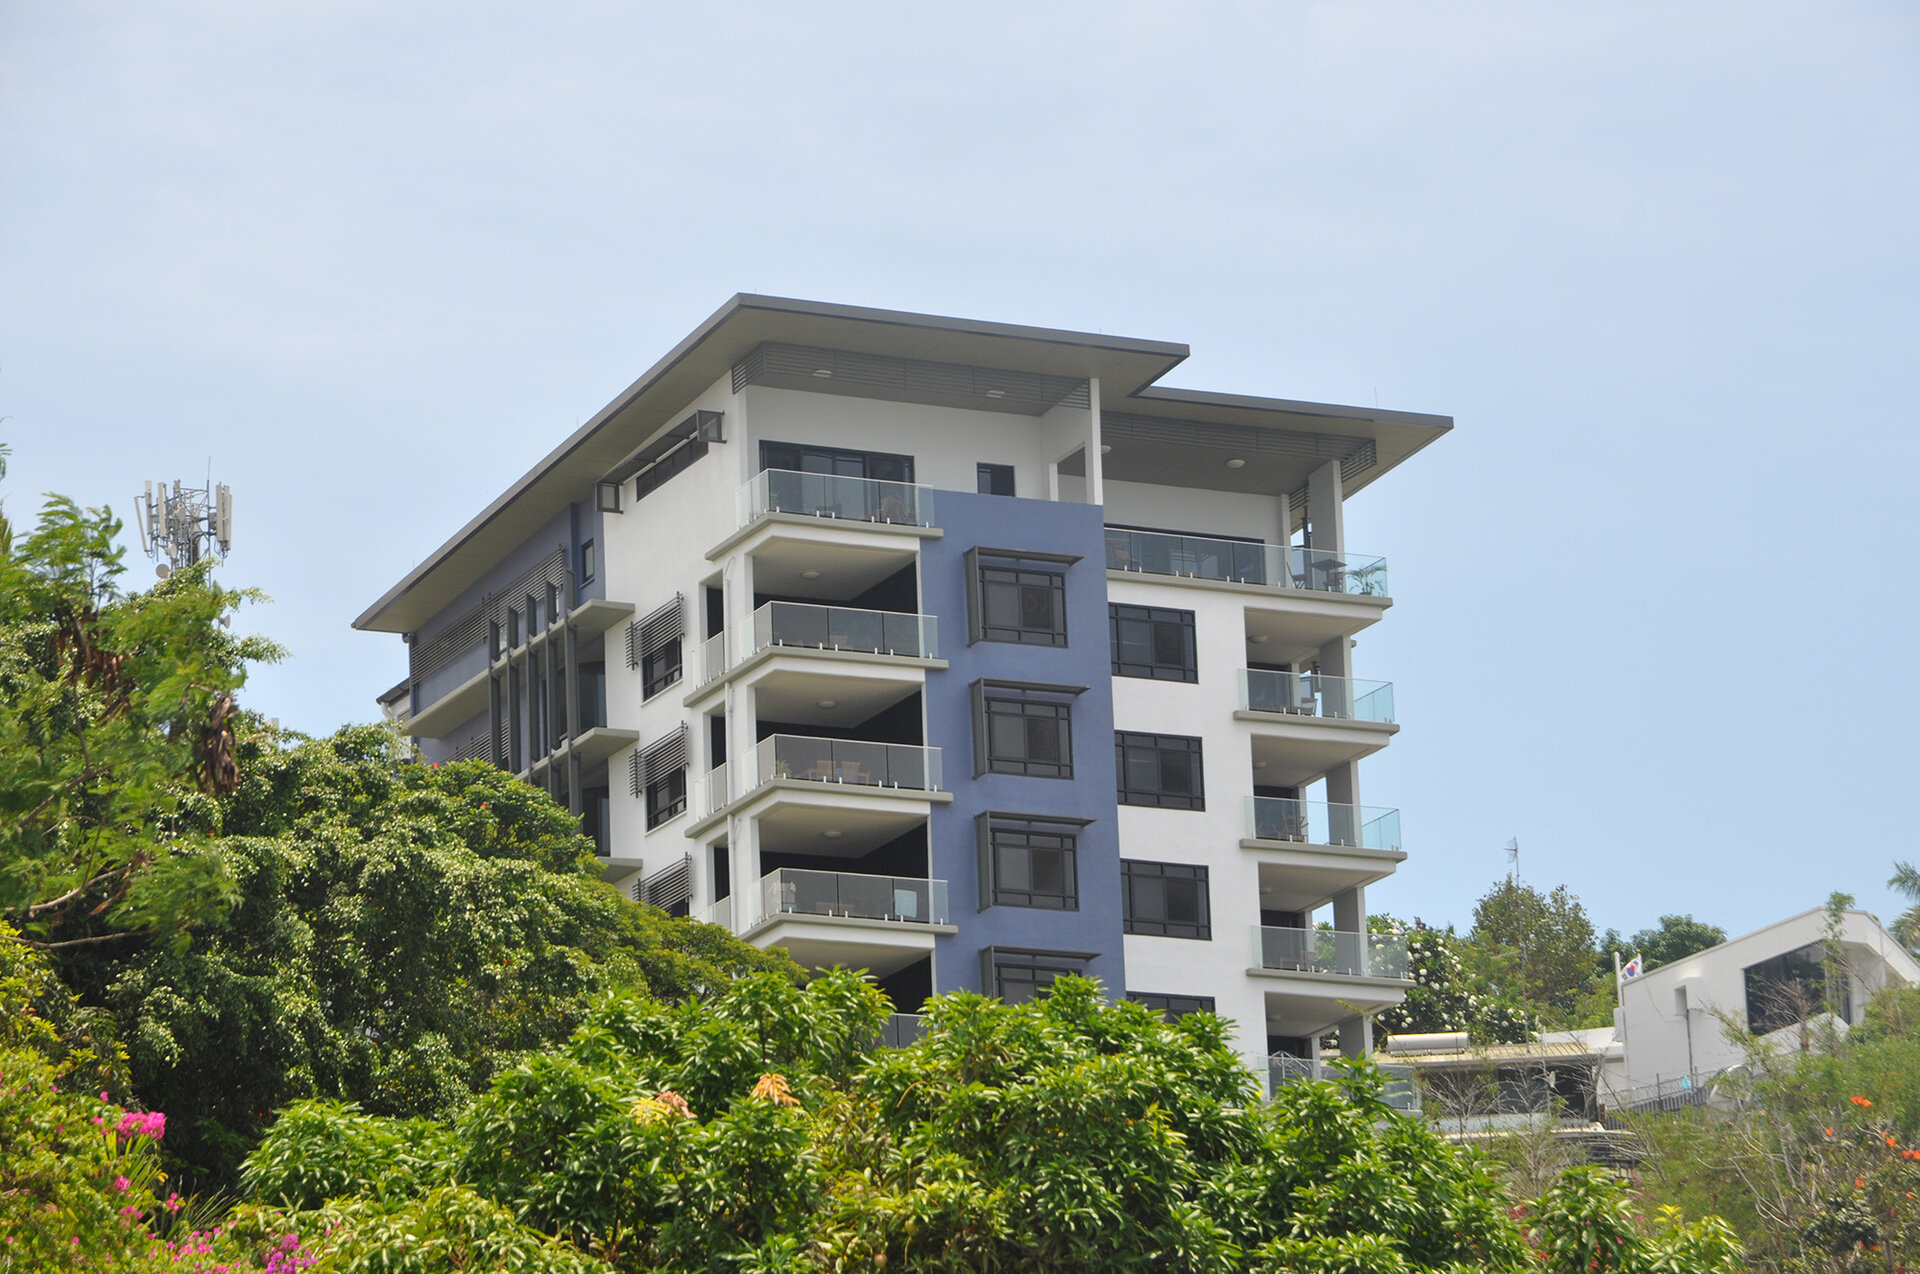 Touguba Hill Apartment building set behind tall trees.